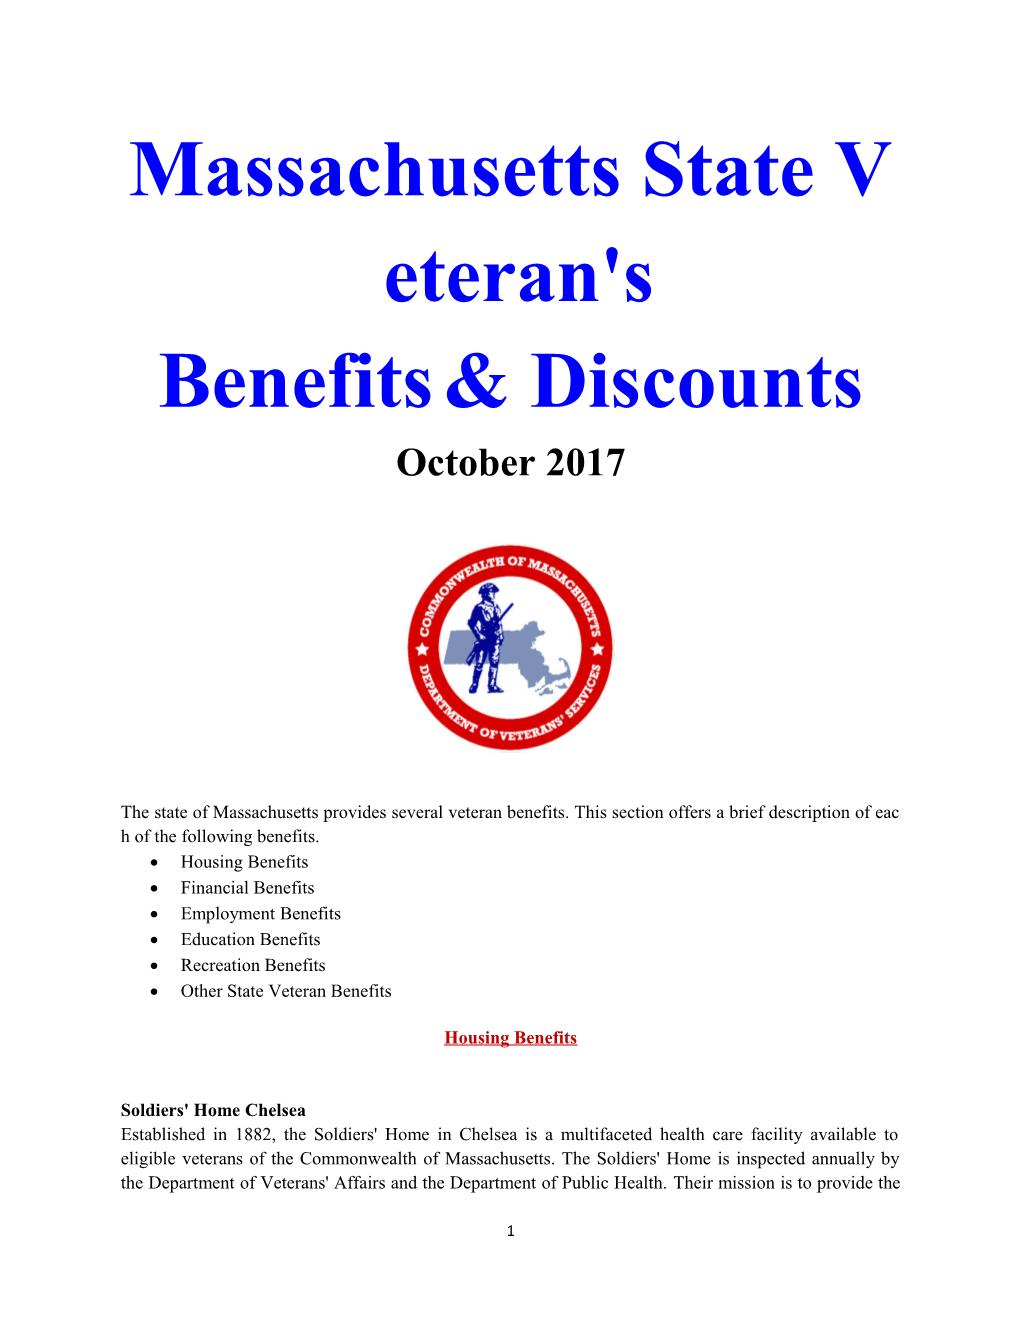 Massachusetts State Veteran's